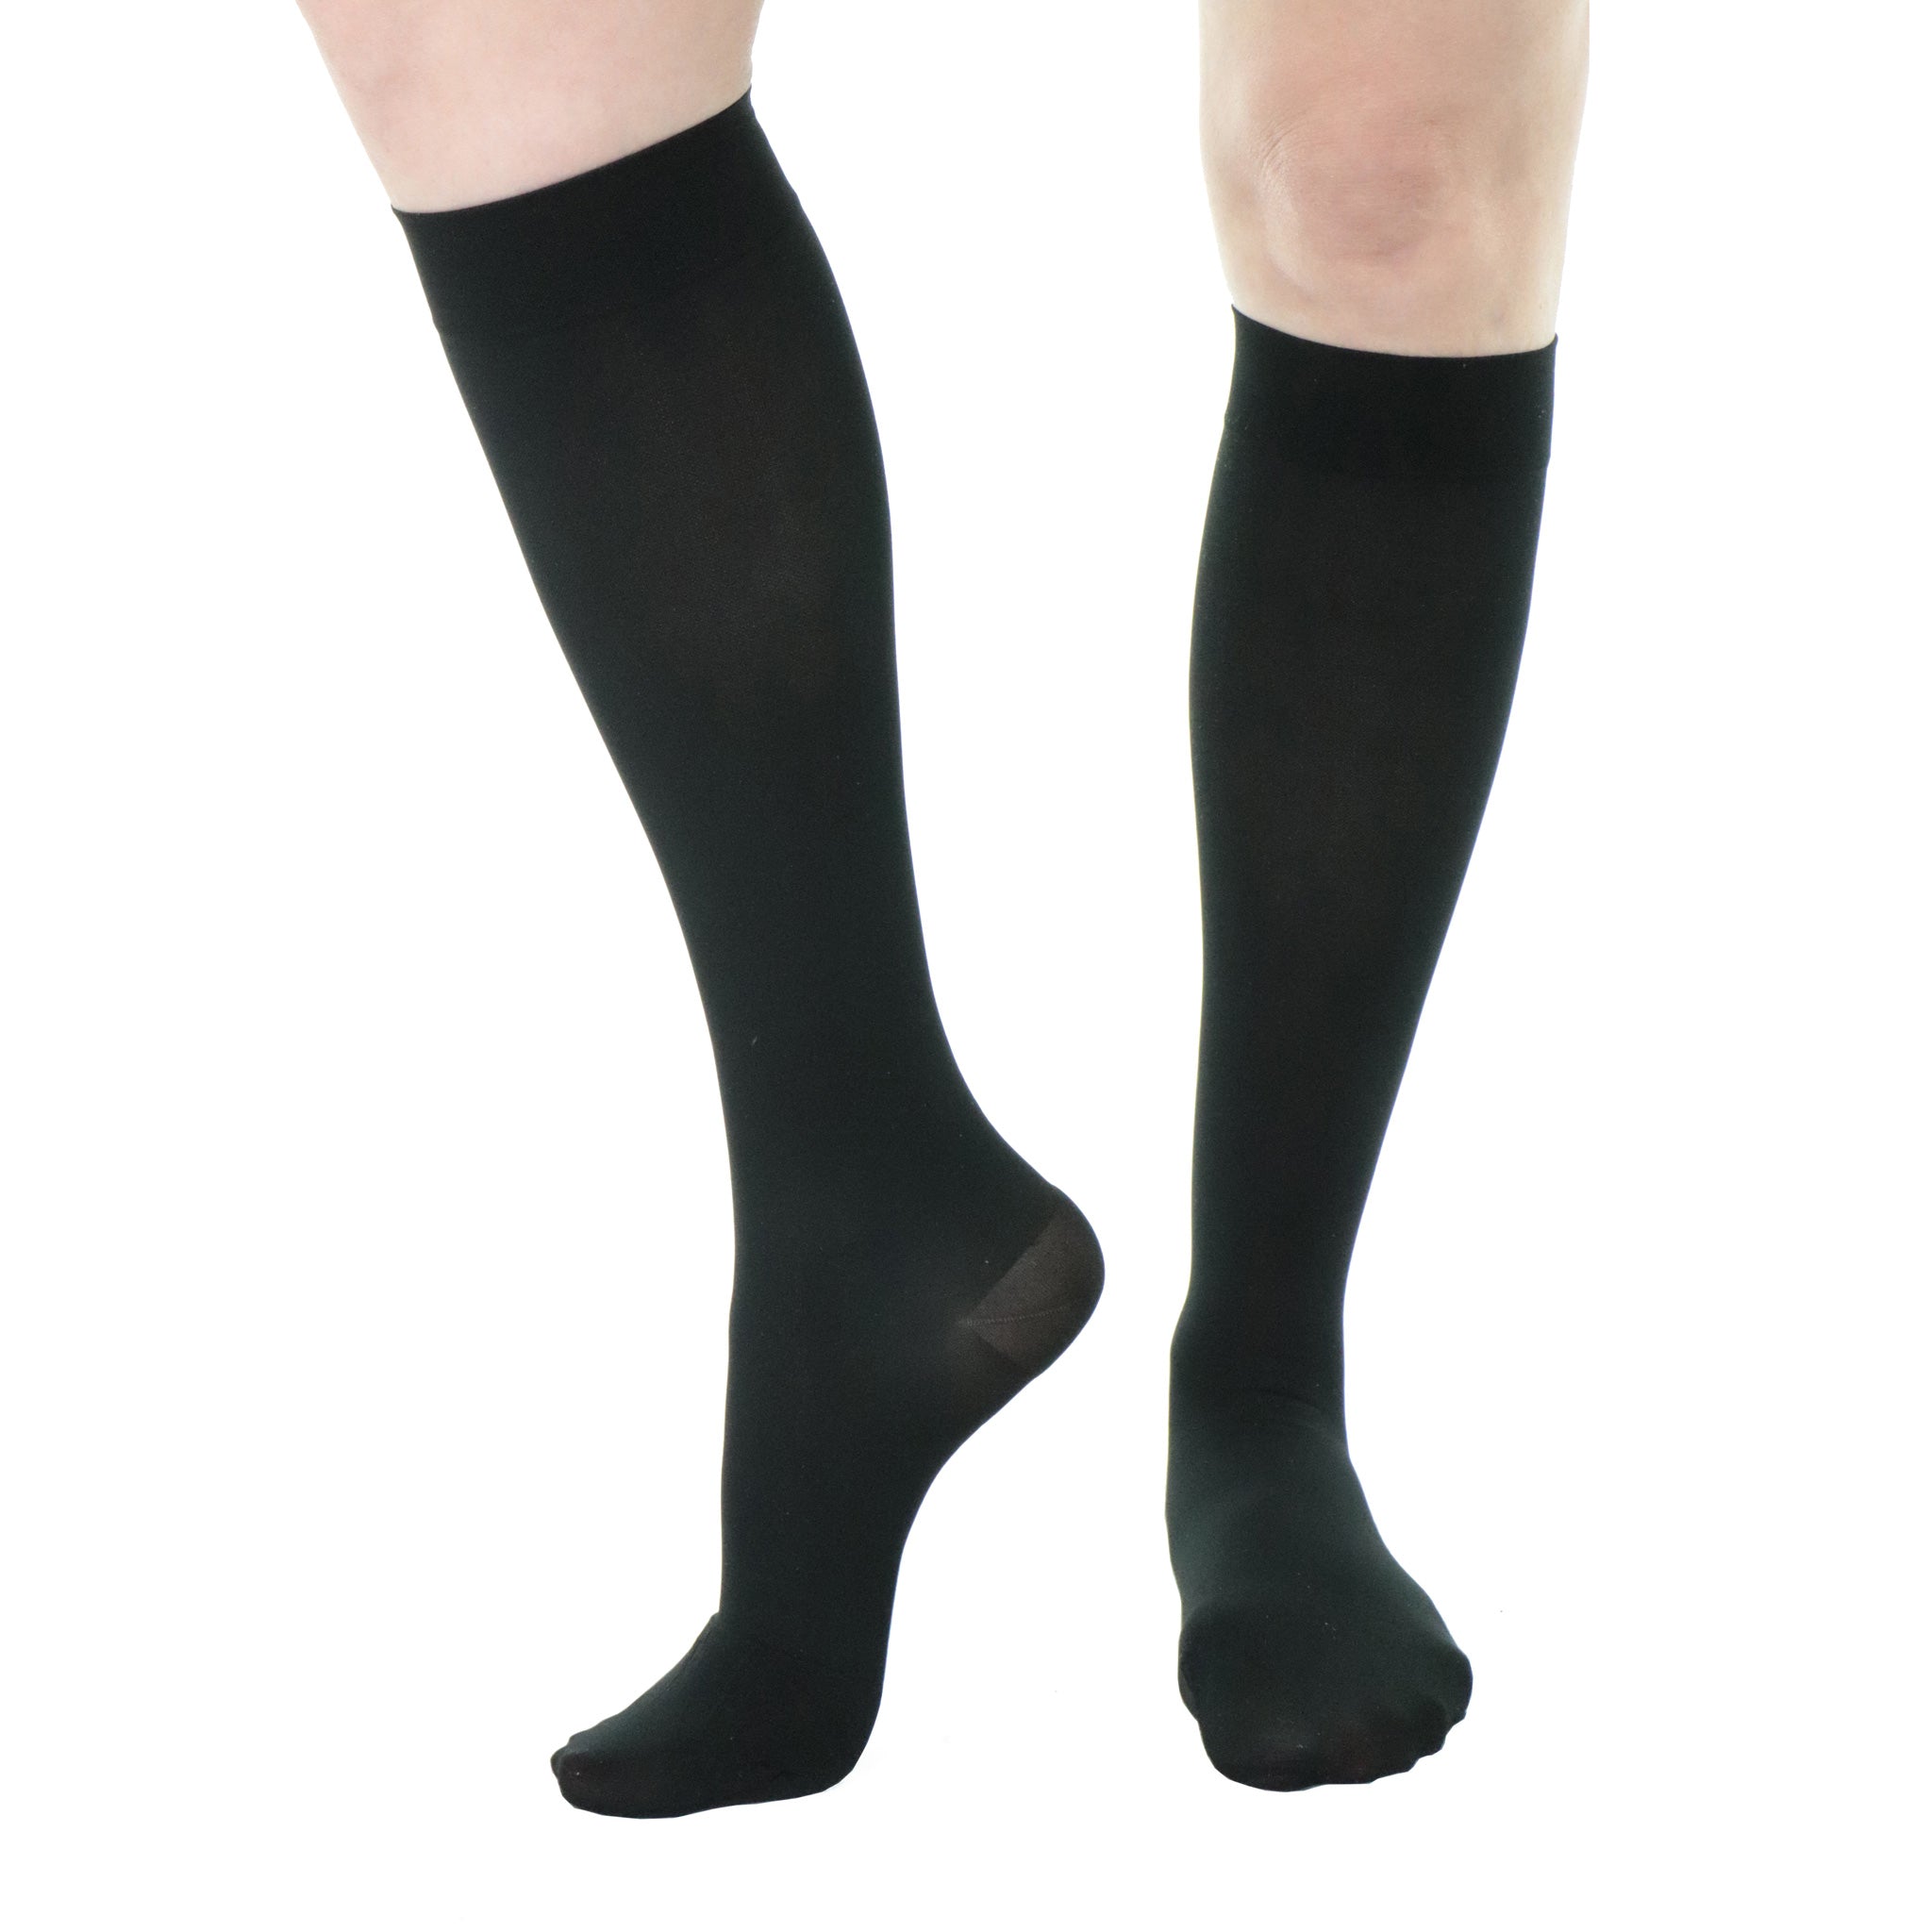 Doctor Brace Circutrend knee women compression stocking closed toe black 30-40 mmHg